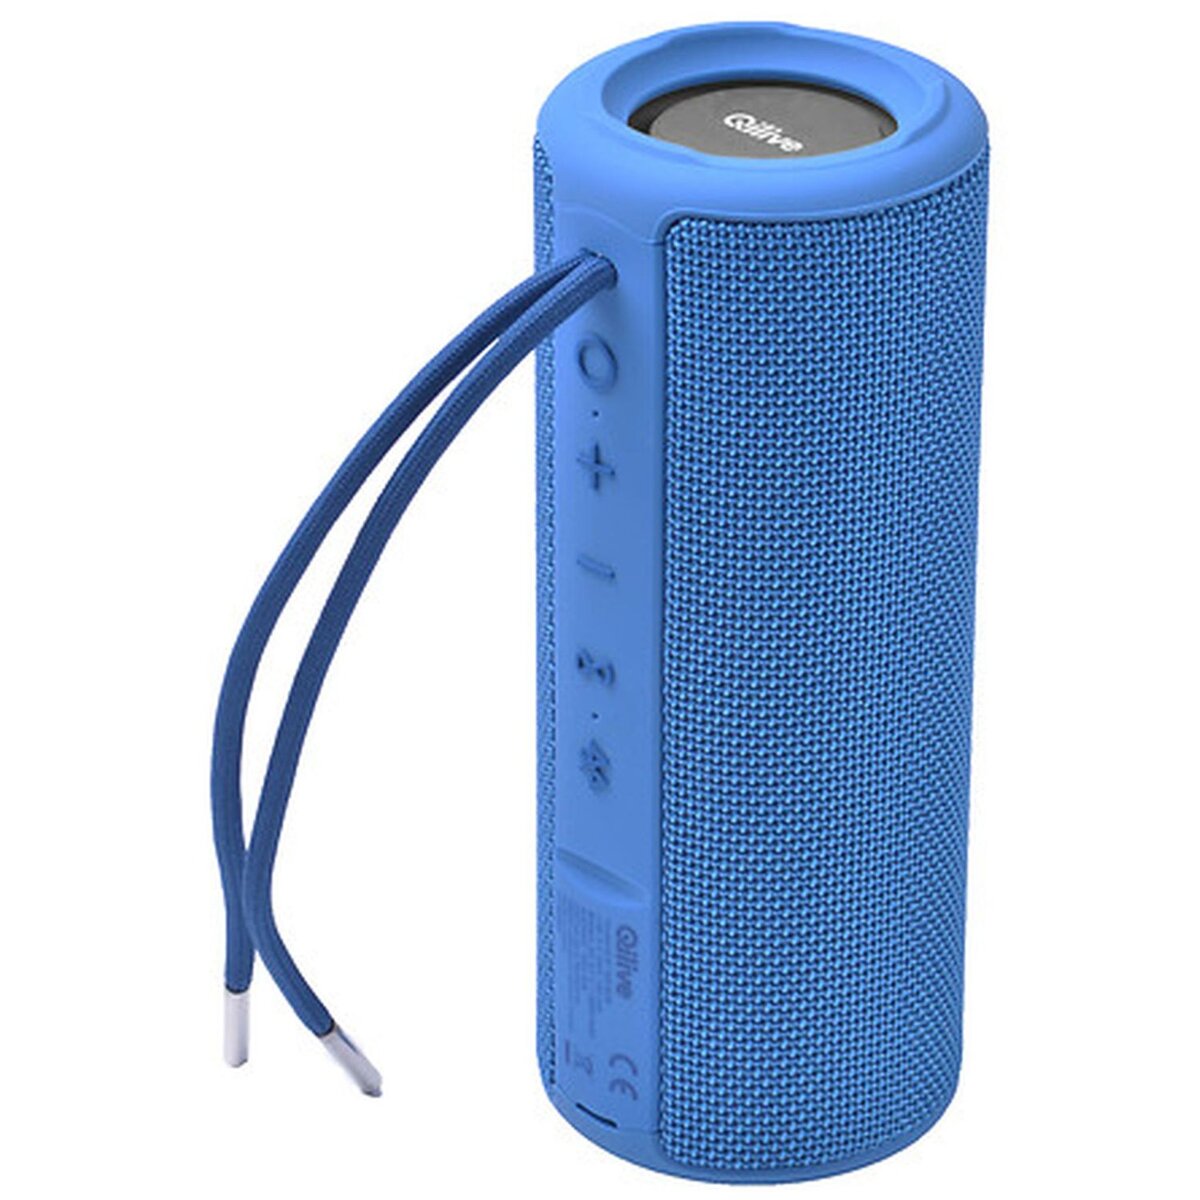 QILIVE Enceinte portable - Bluetooth - Bleu - Q1530